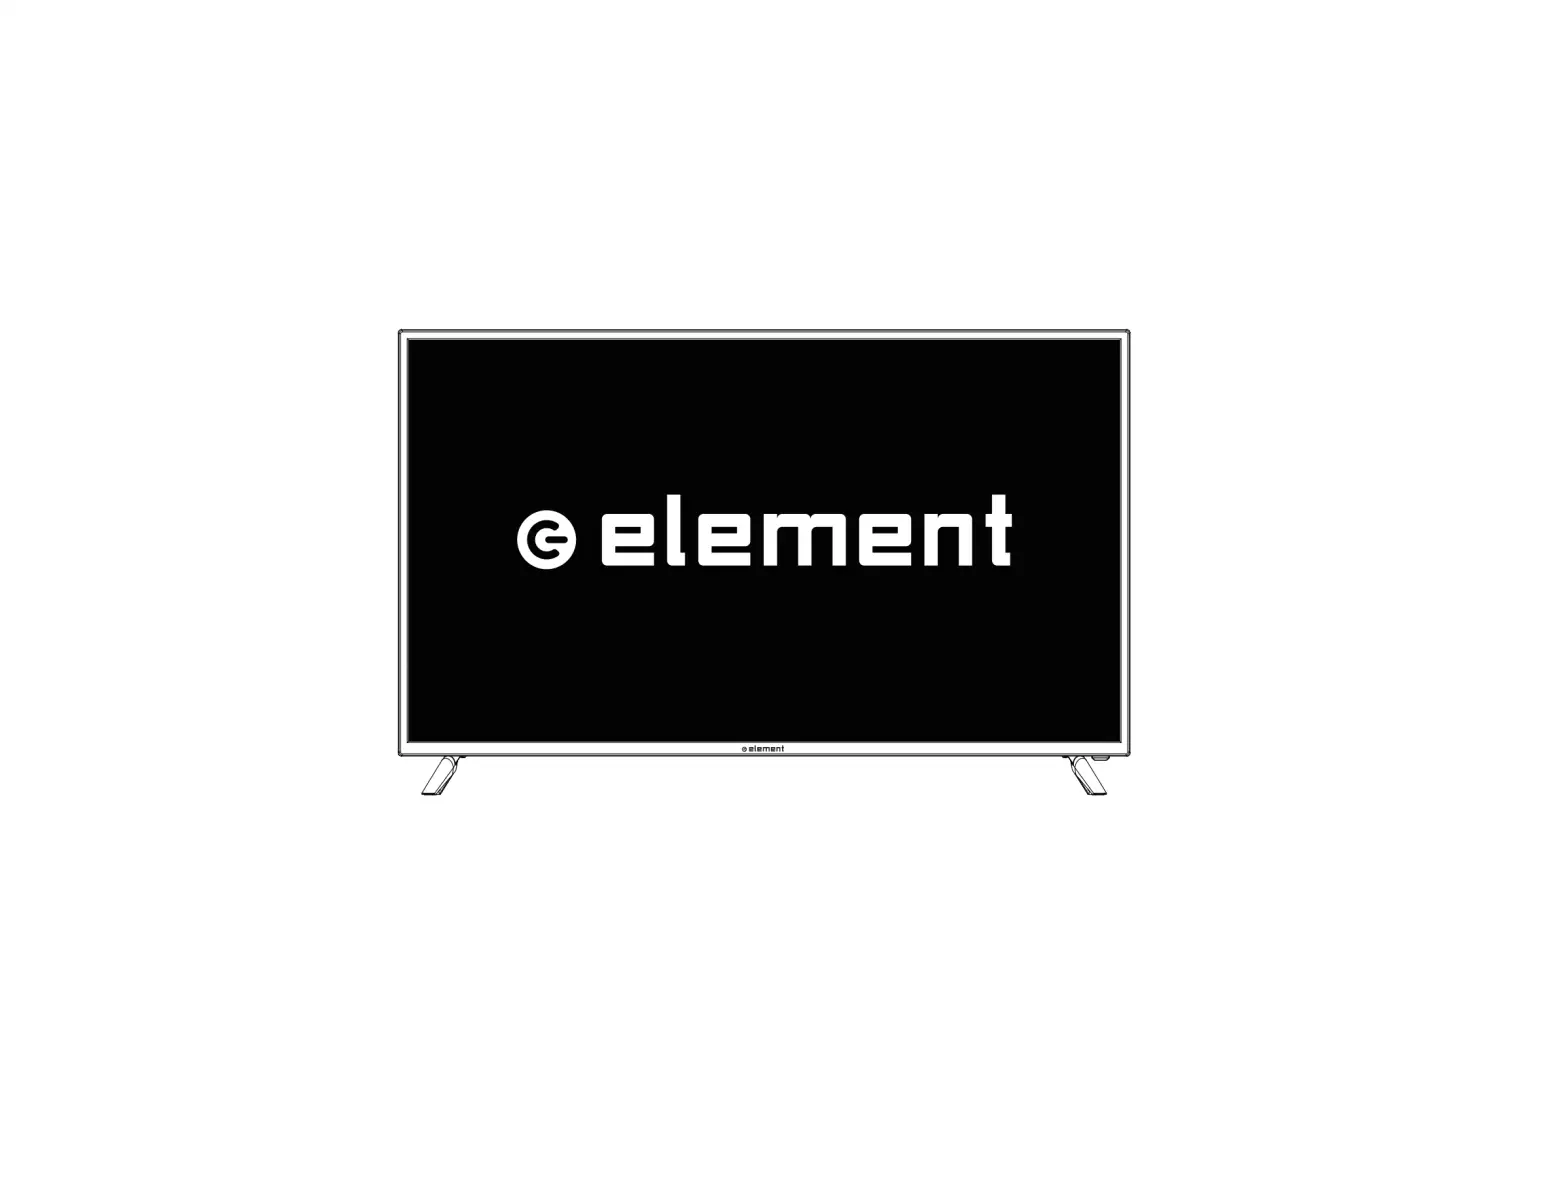 element Digital Led Tv User Guide - Manualsee